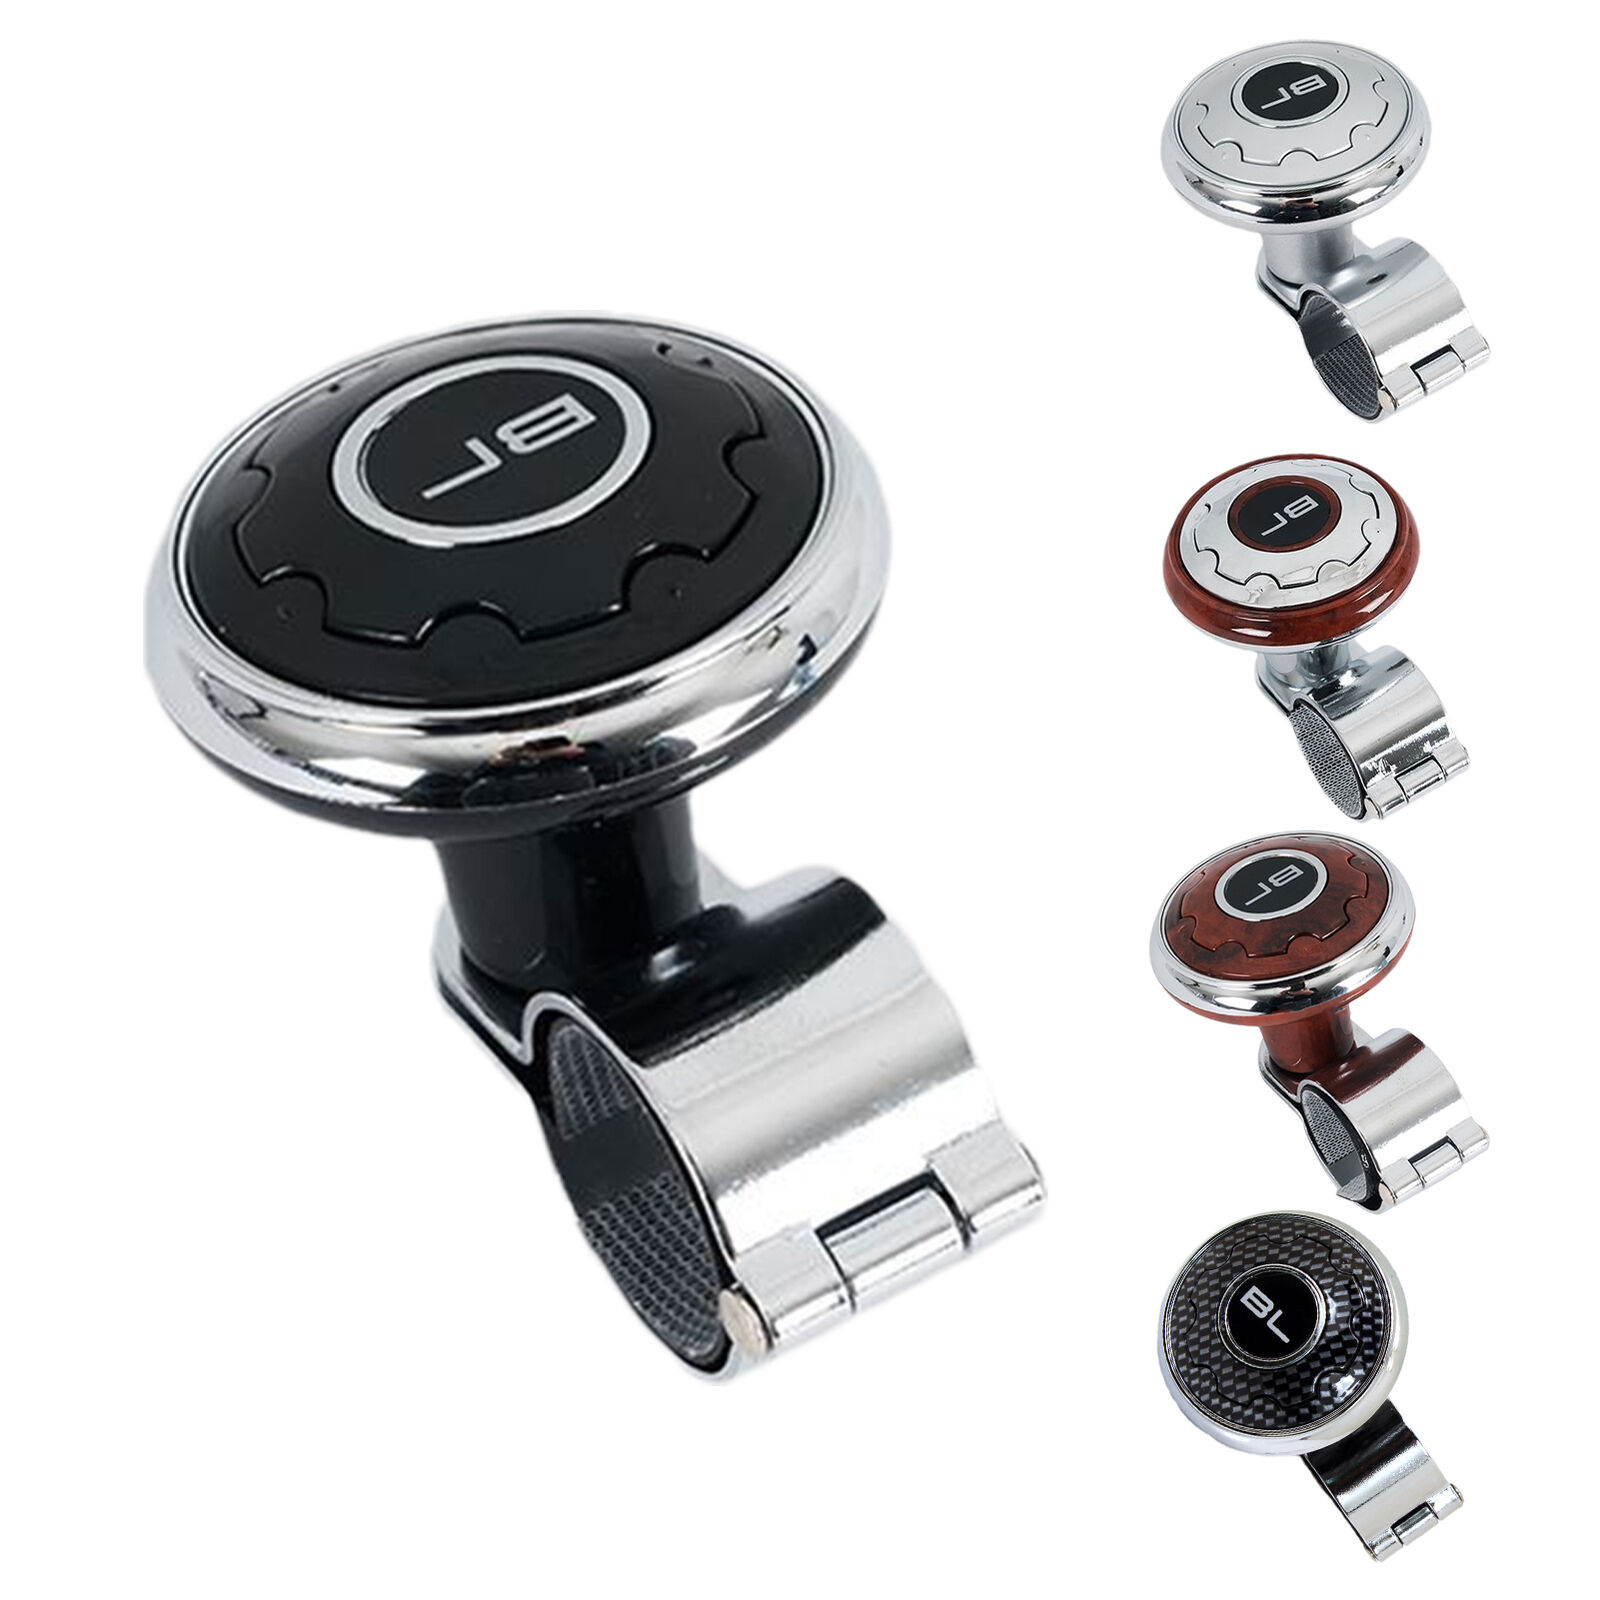 Universal Car Truck Steering Wheel Aid Power Handle Assister Spinner Knob Ball